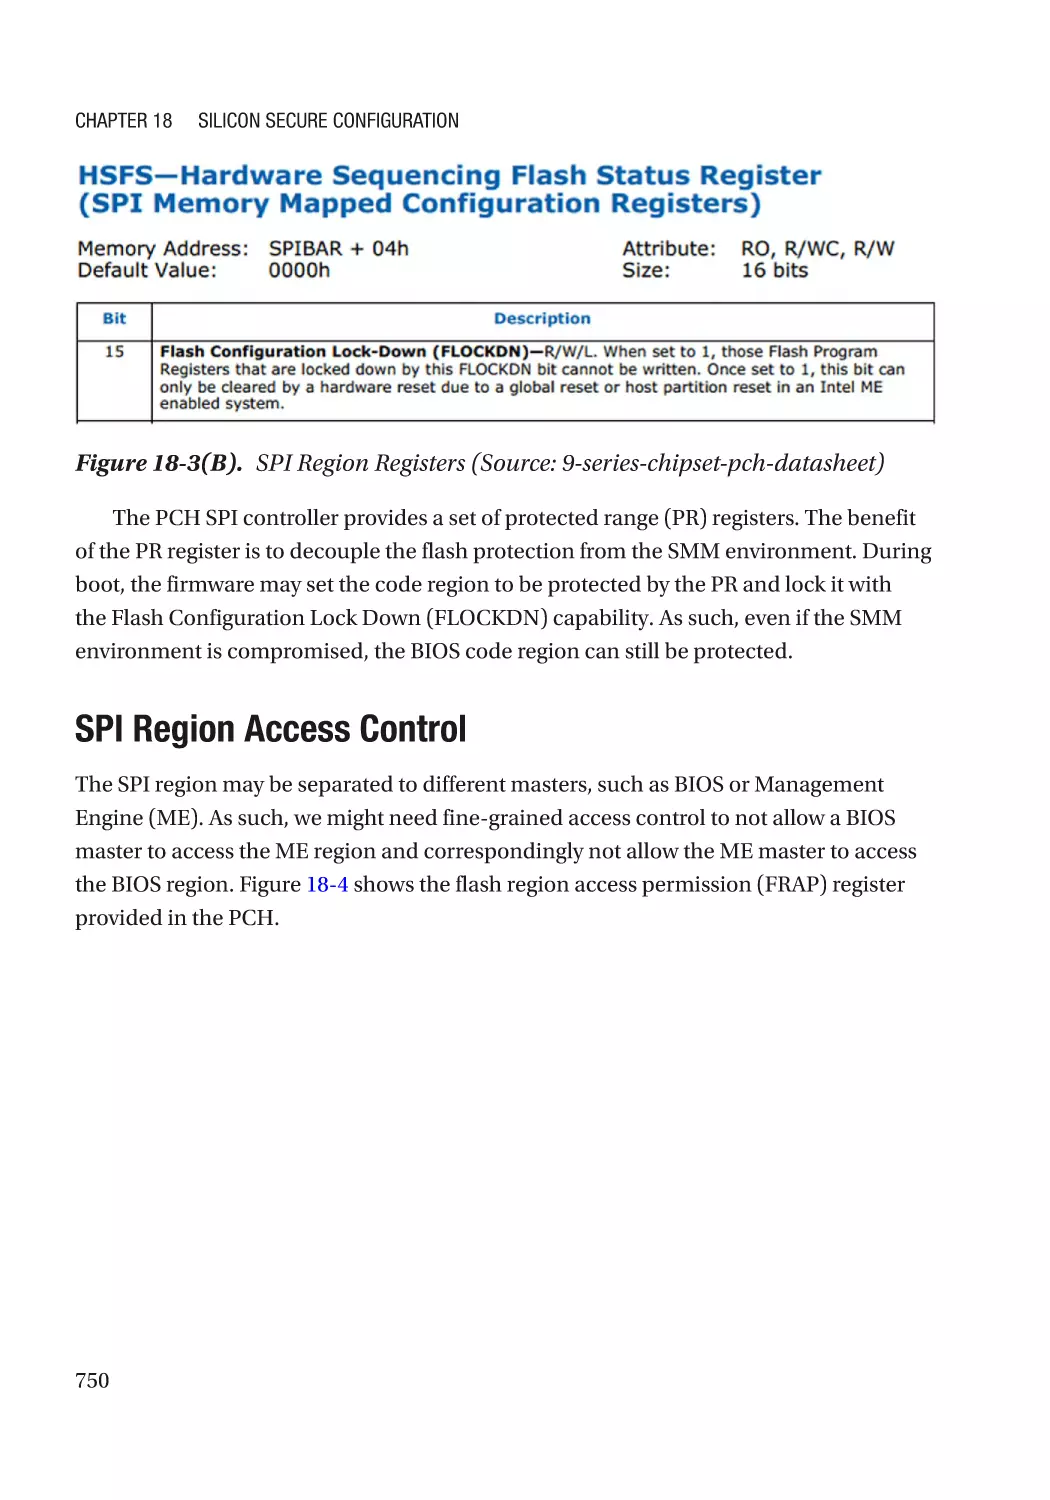 SPI Region Access Control